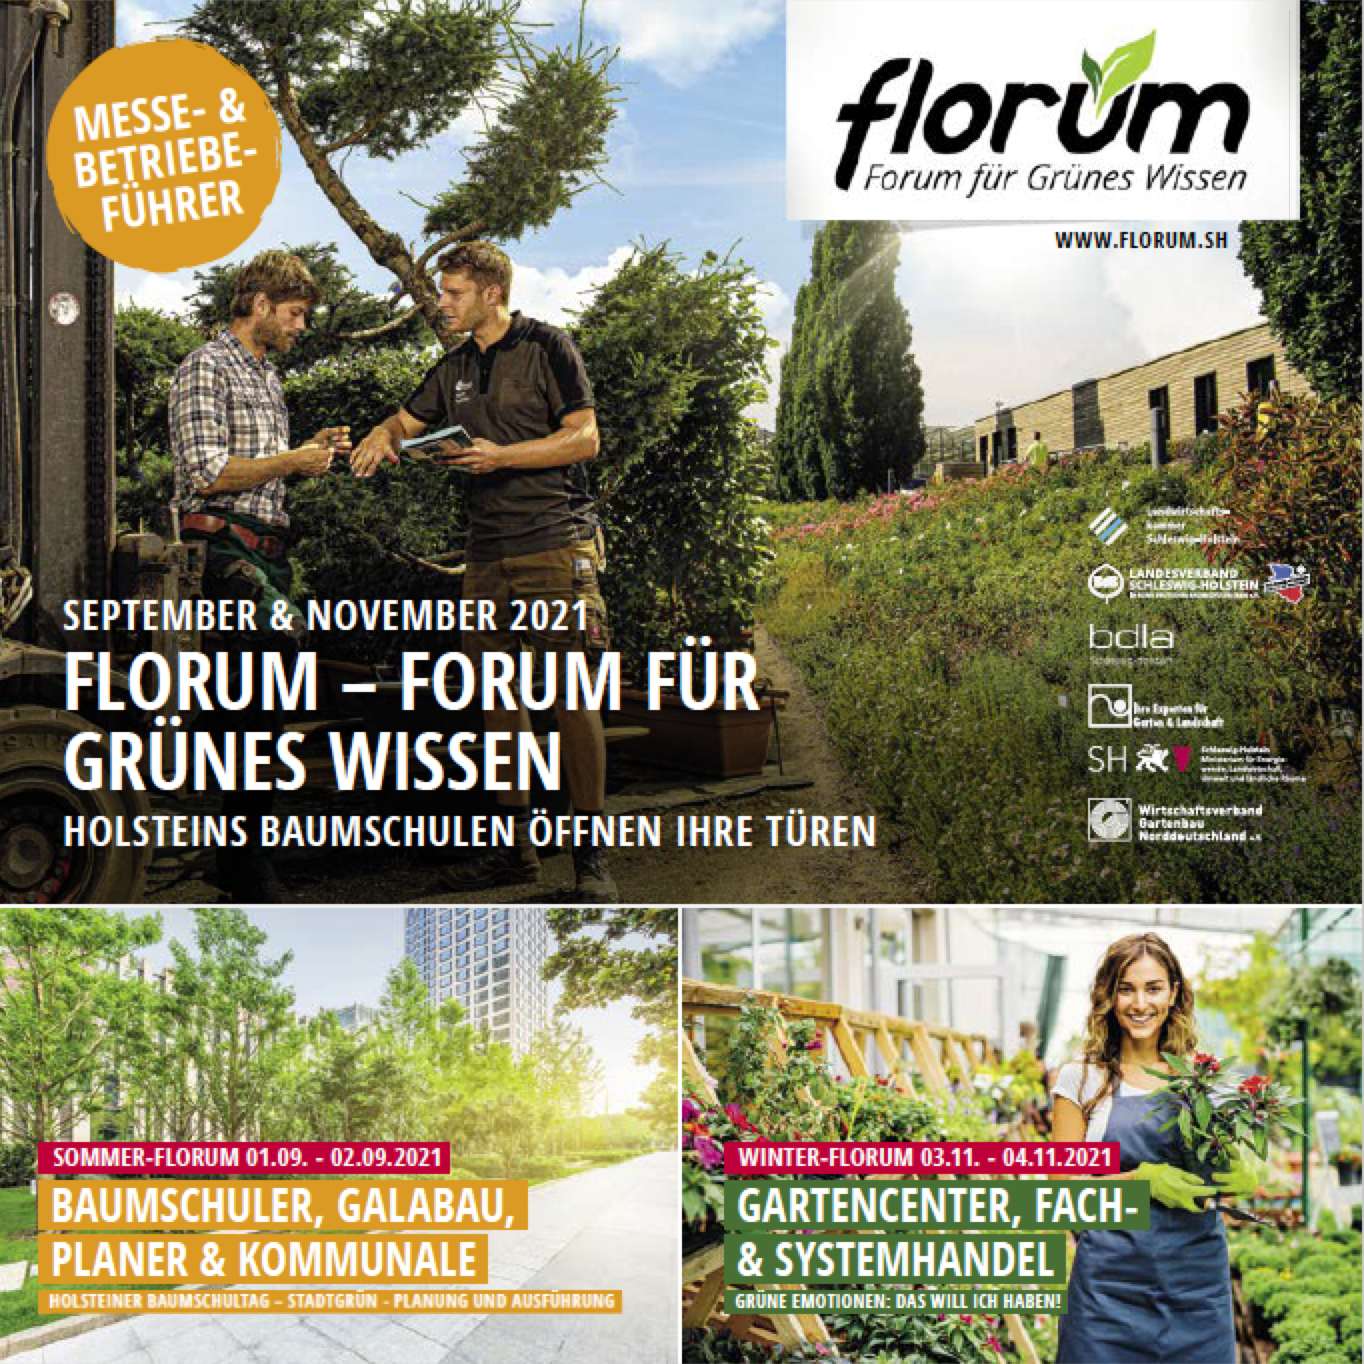 Betriebeführer Florum 2021